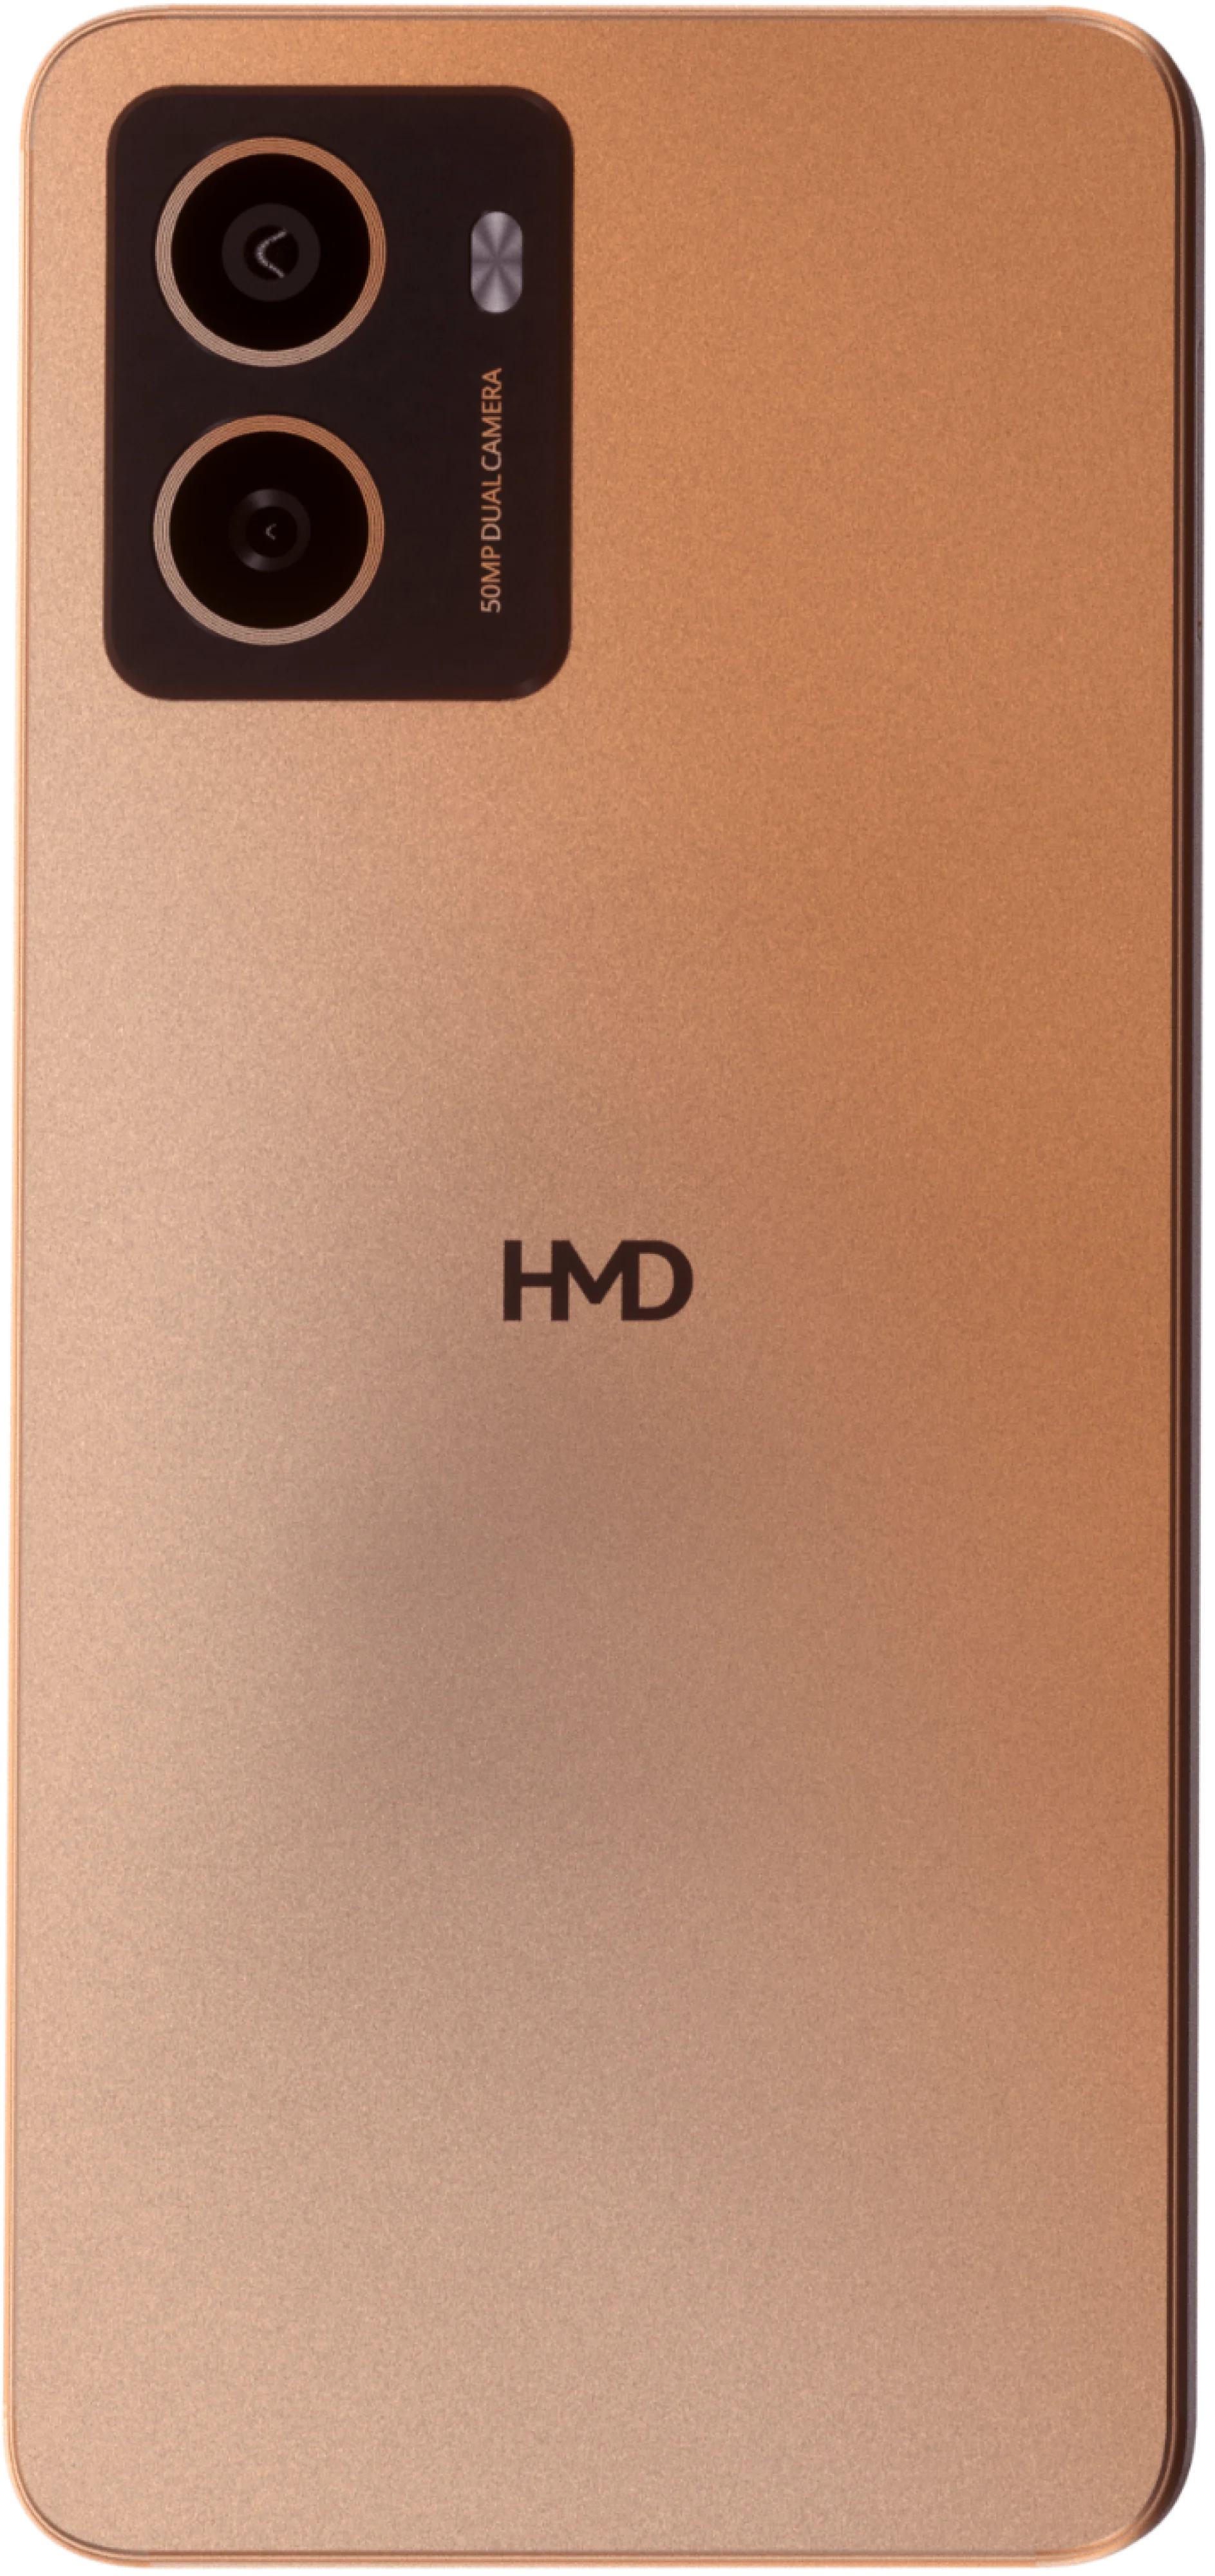 HMD Pulse+ smartphone in Apricot Crush color